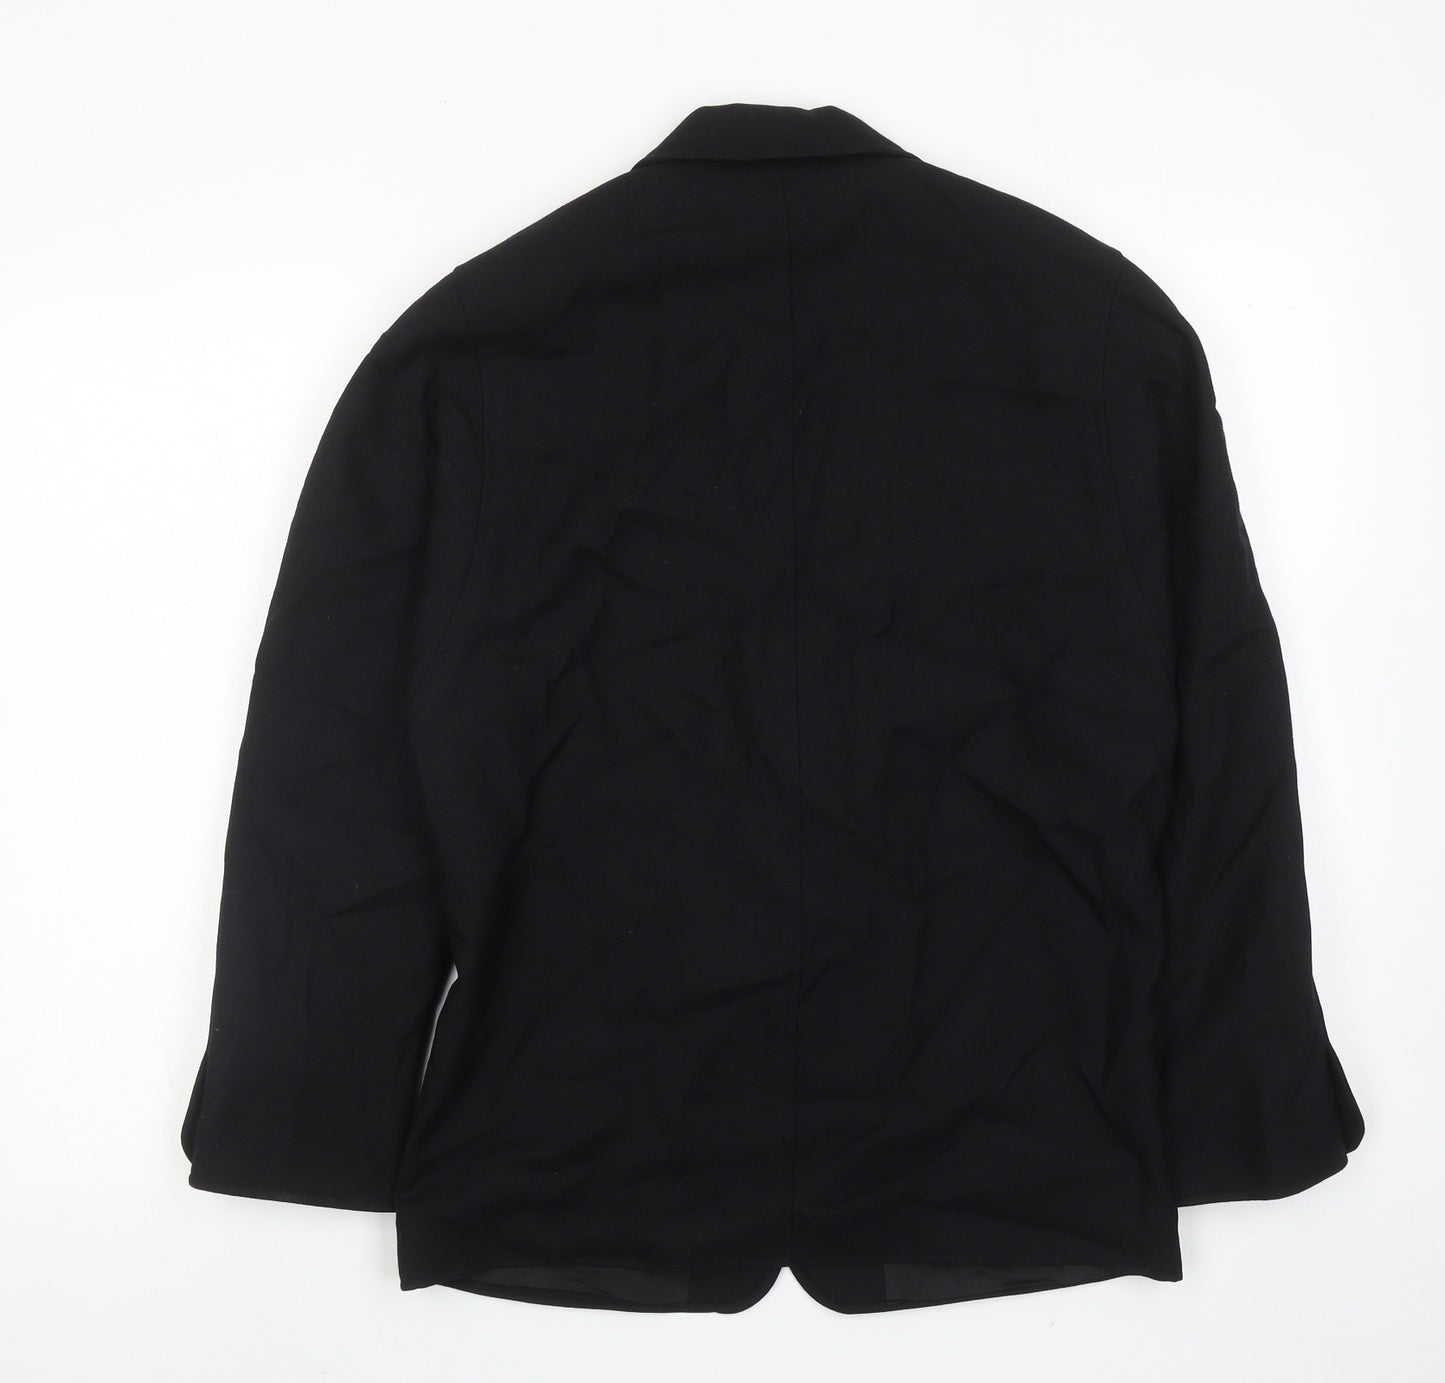 NEXT Womens Black Wool Jacket Suit Jacket Size 8